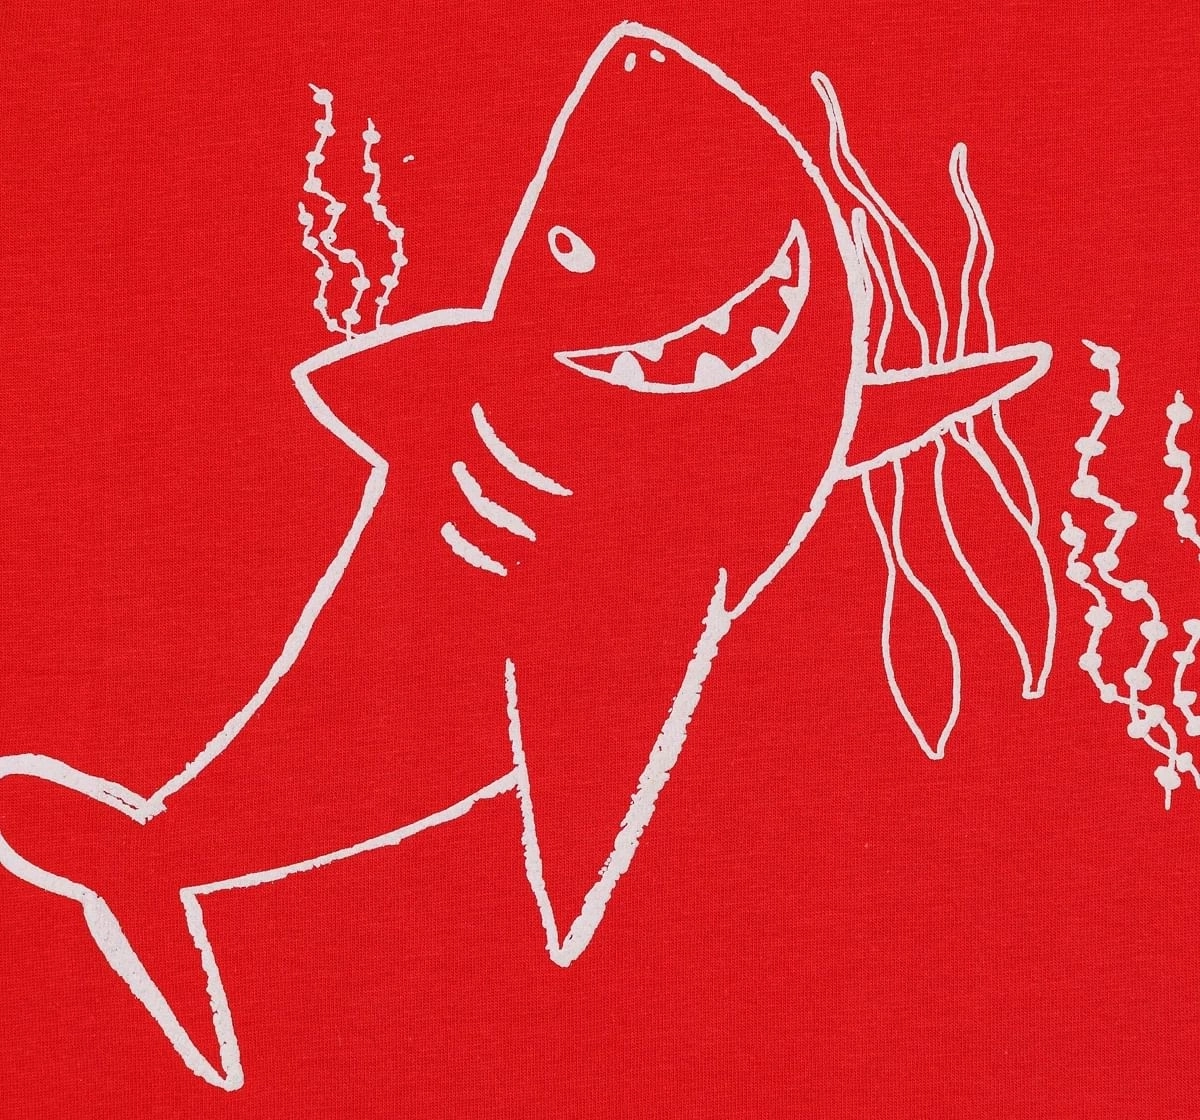 H by Hamleys Boys Short Sleeves T-Shirt Shark Print-Red